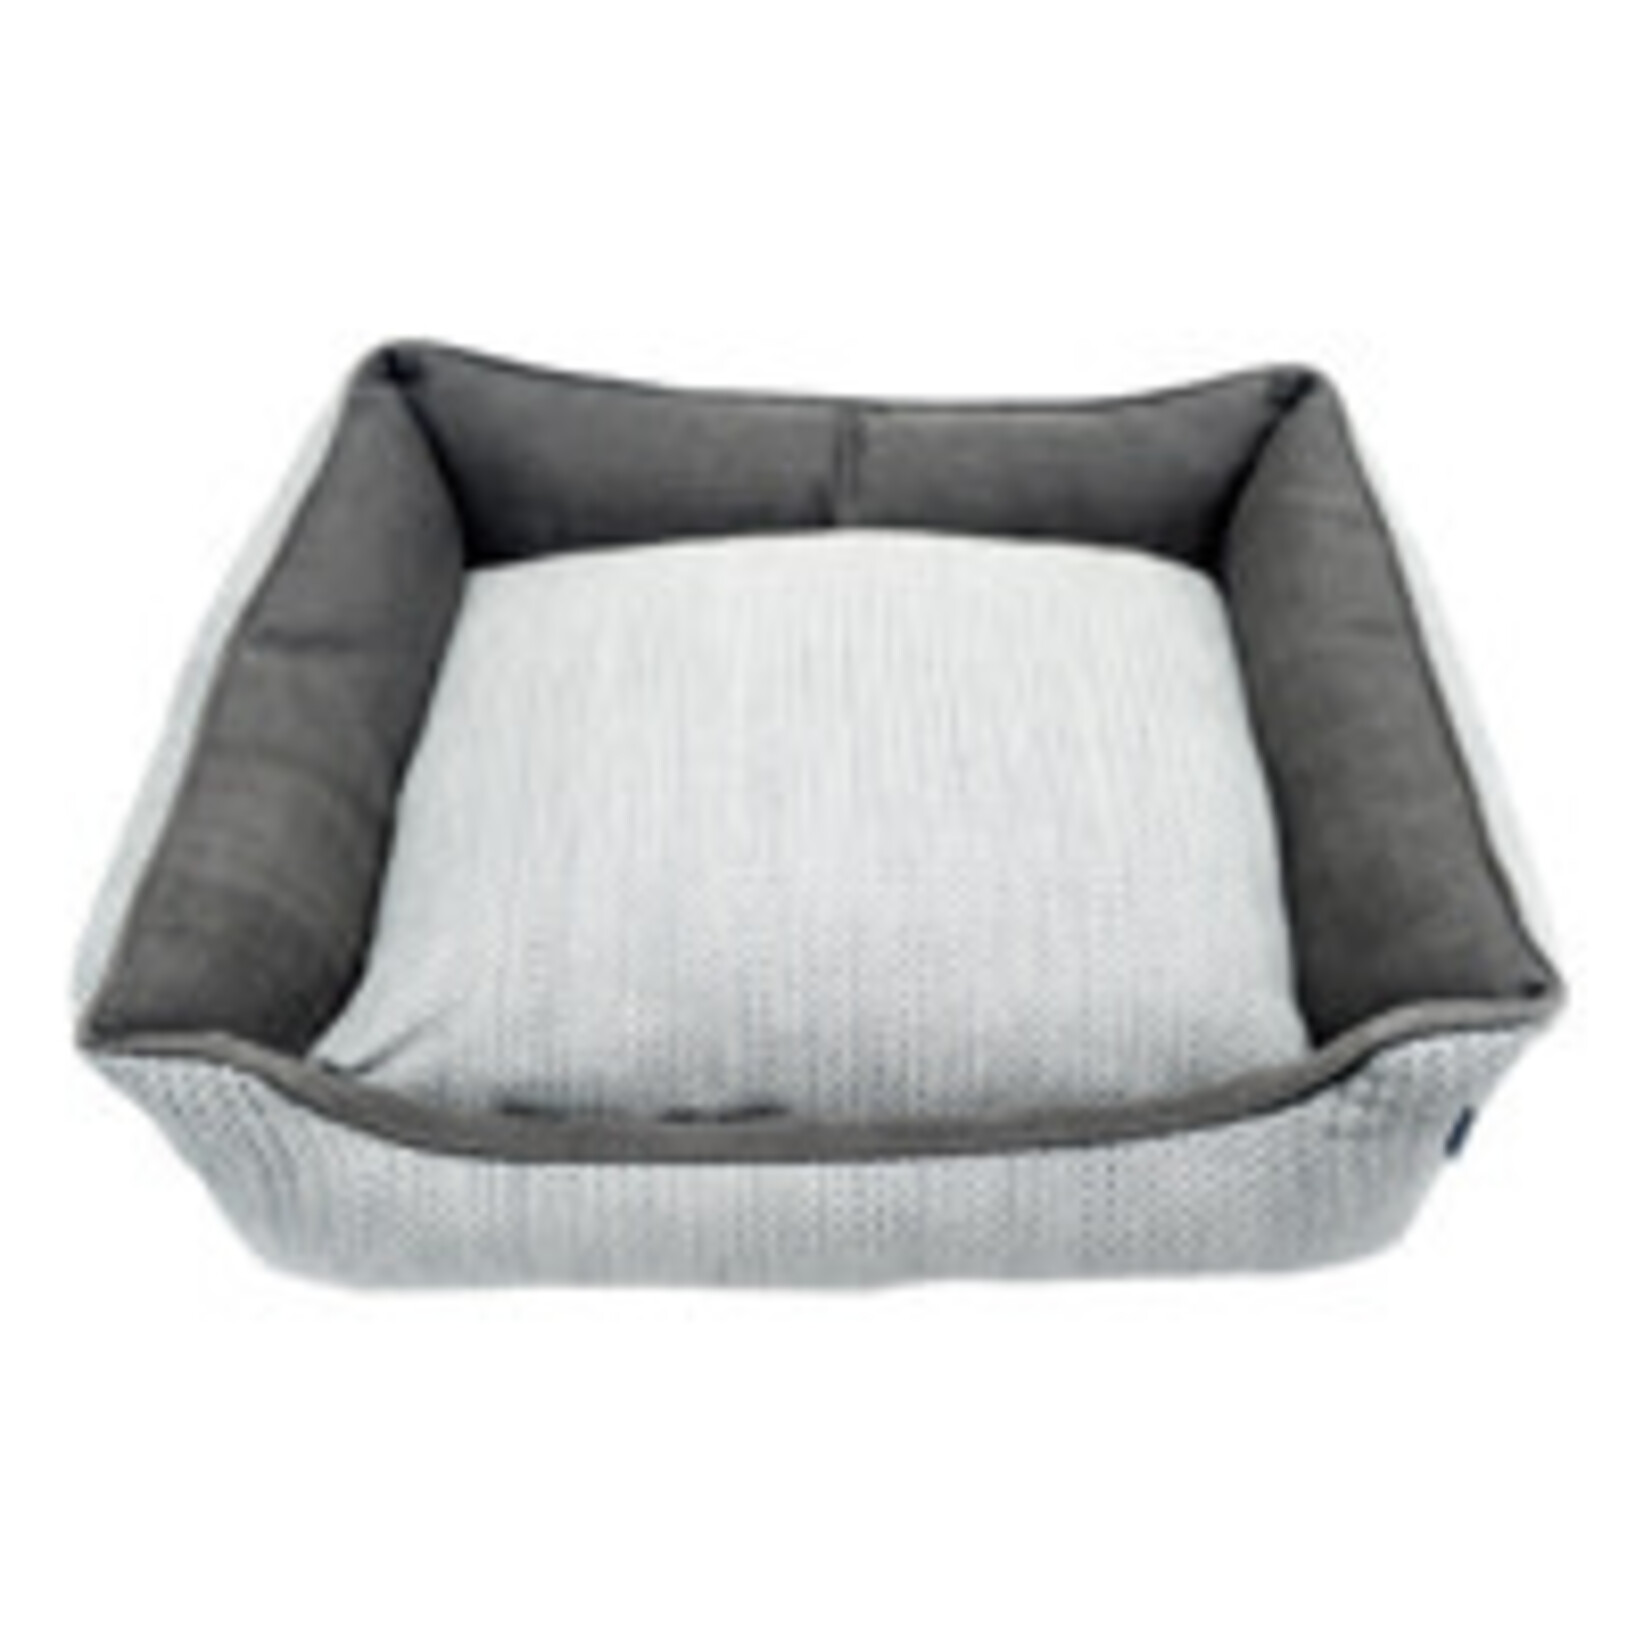 Resploot Toy Resploot Sofa Bed - Rectangular - Grey Snakeskin - 60 x 50 x 21 cm (24 x 20 x 8 in)